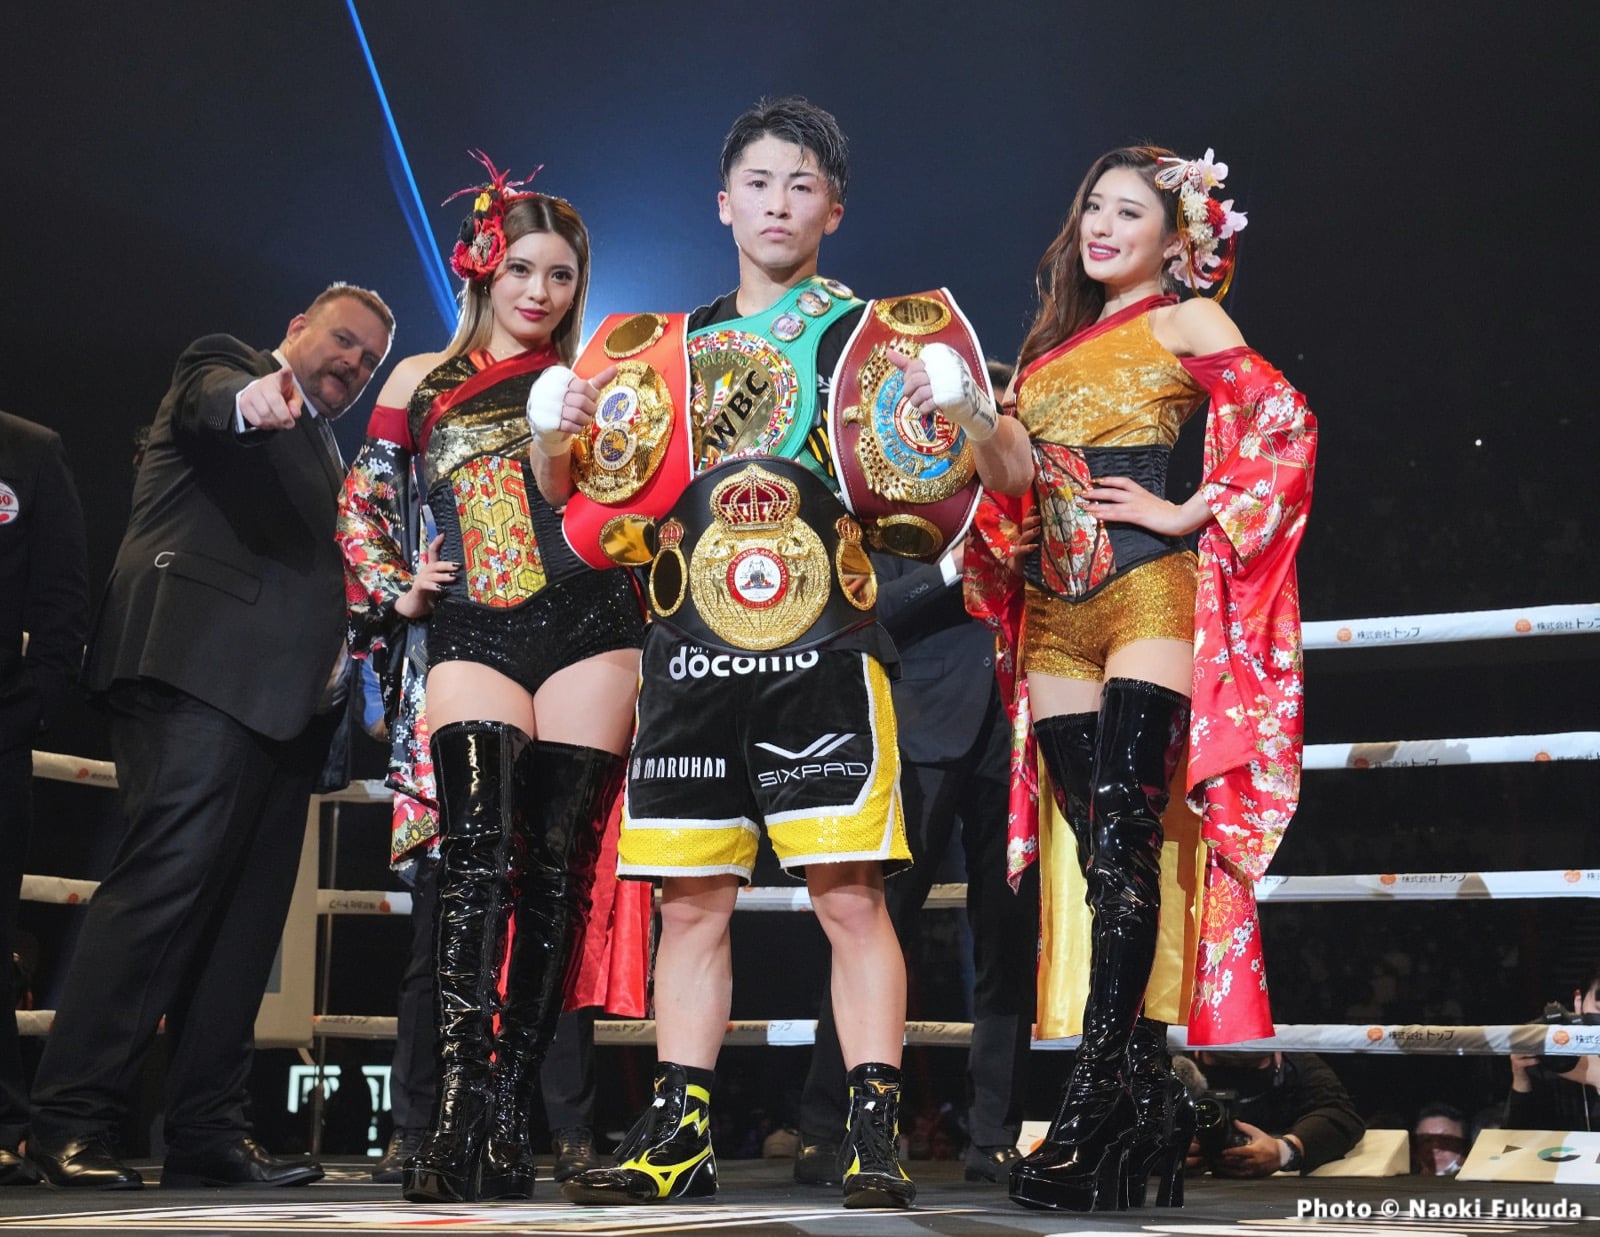 Inoue vs. Butler - Live Results: Naoya Inoue Becomes Four-Belt Bantamweight King